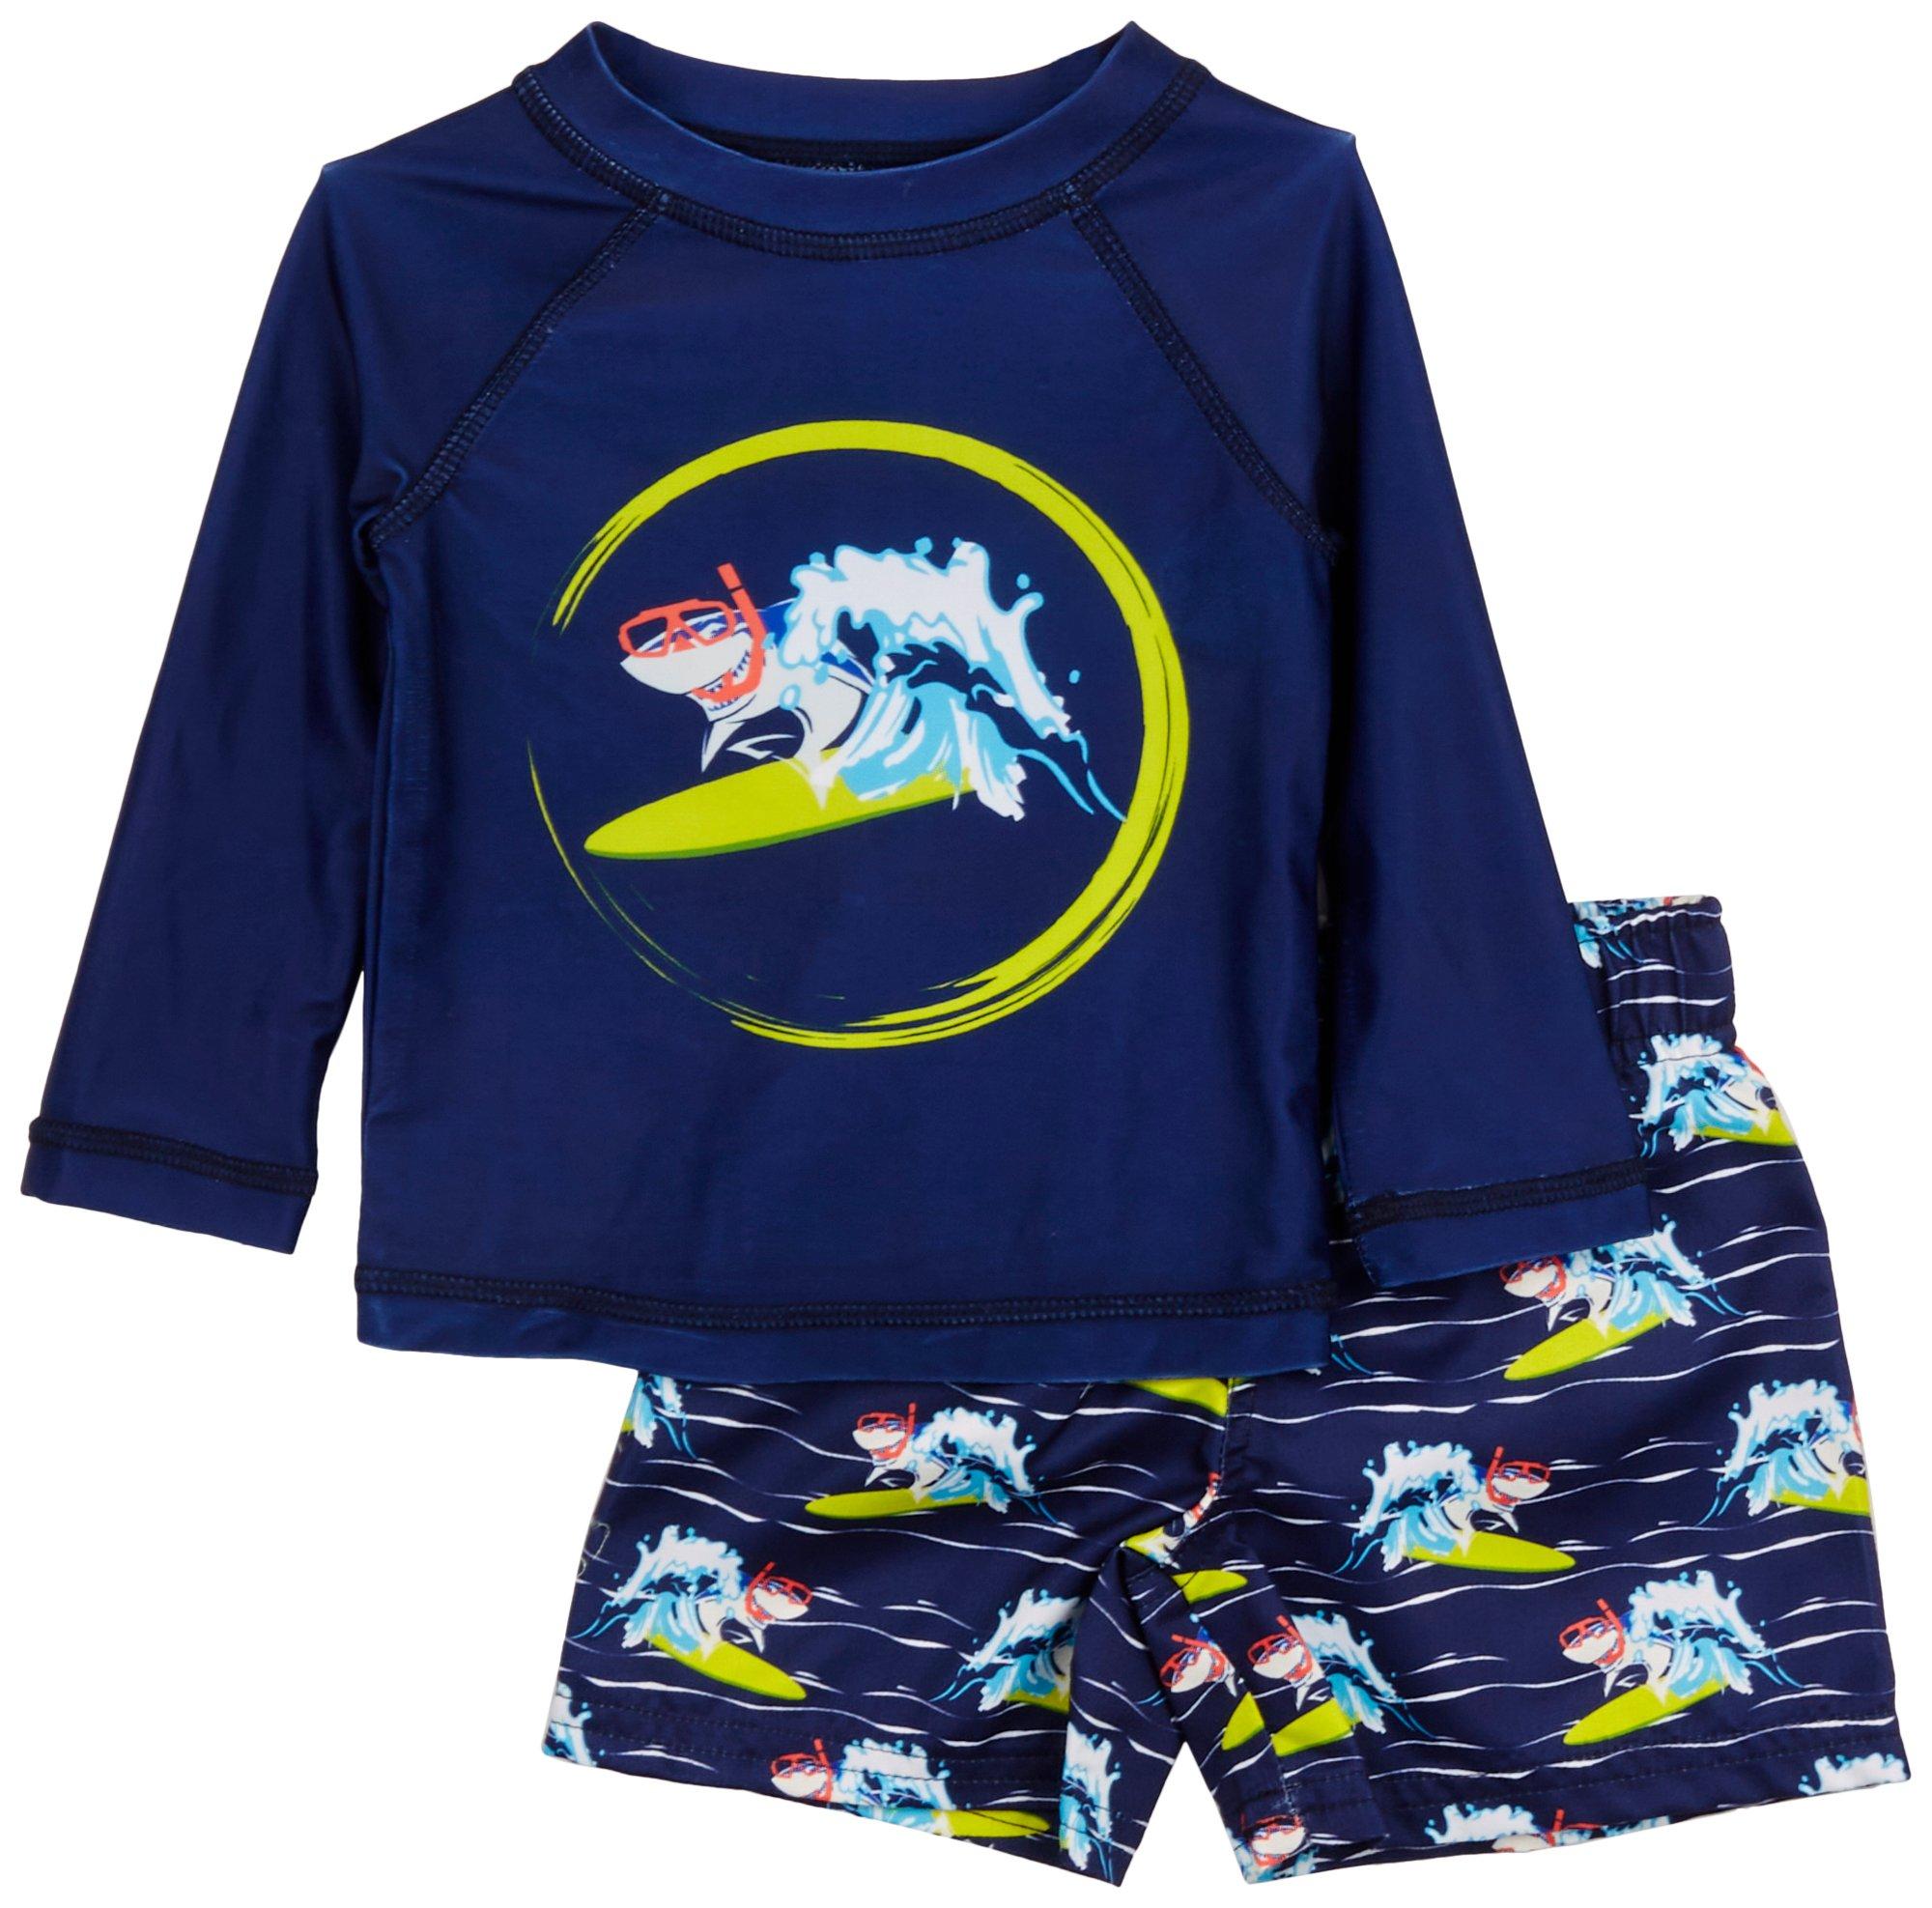 DOT & ZAZZ Baby Boys 2-pc. Surf Shark Swimsuit Set